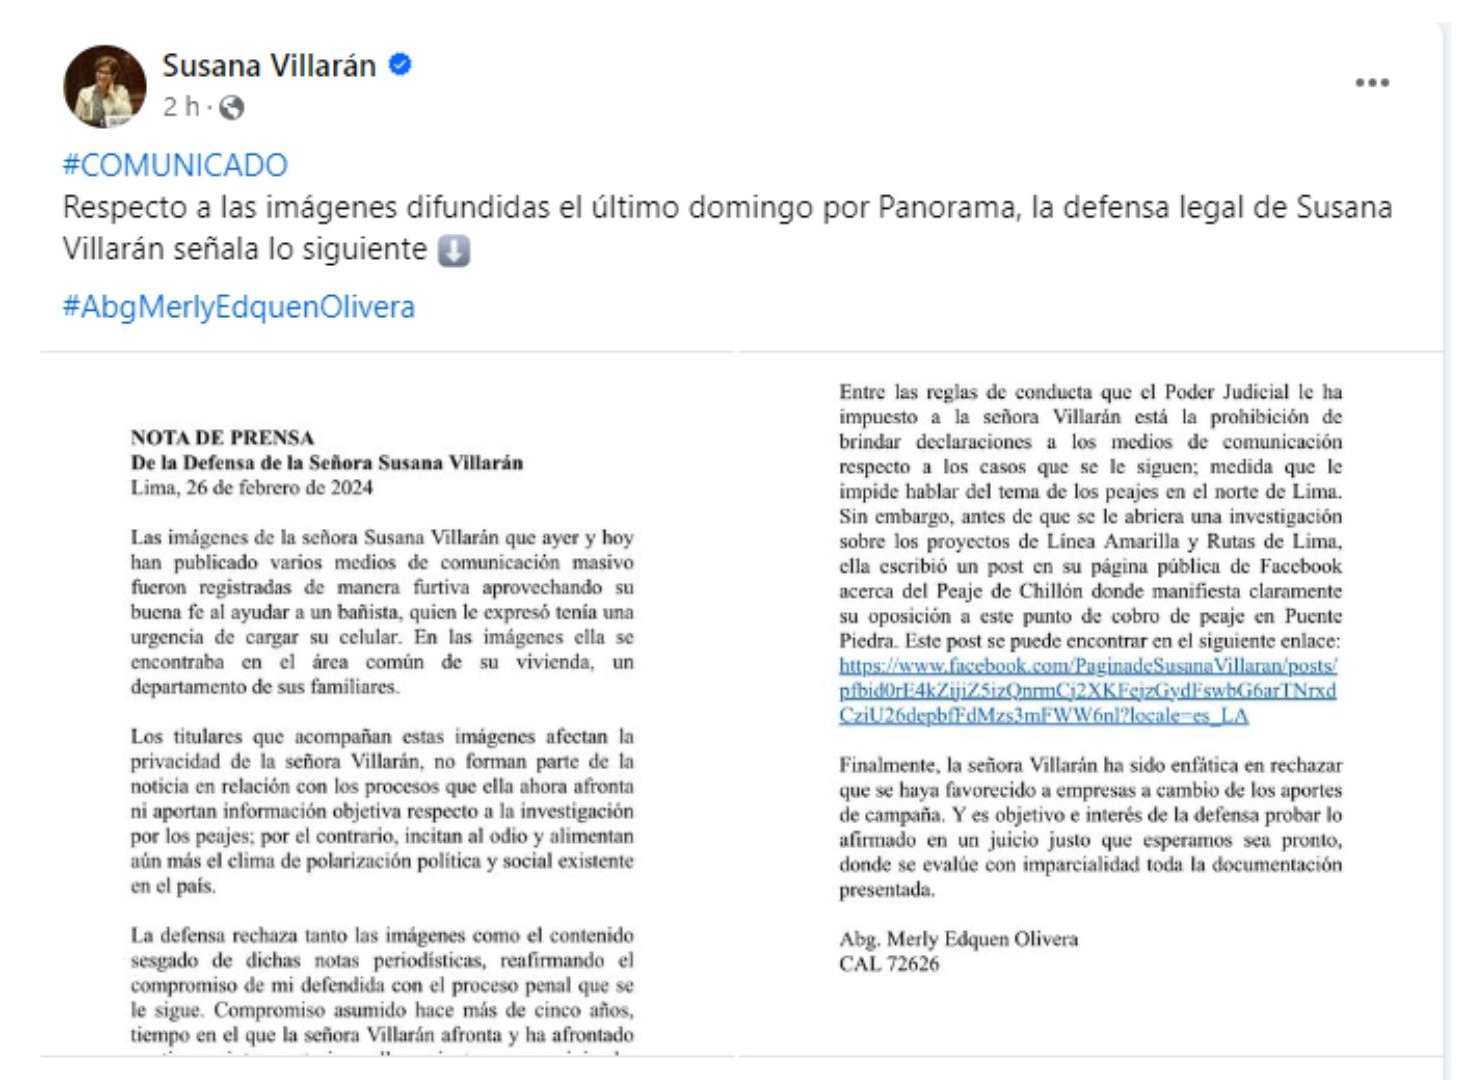 Defensa legal de Susana Villarán: "Imágenes afectan la privacidad de la exalcaldesa"